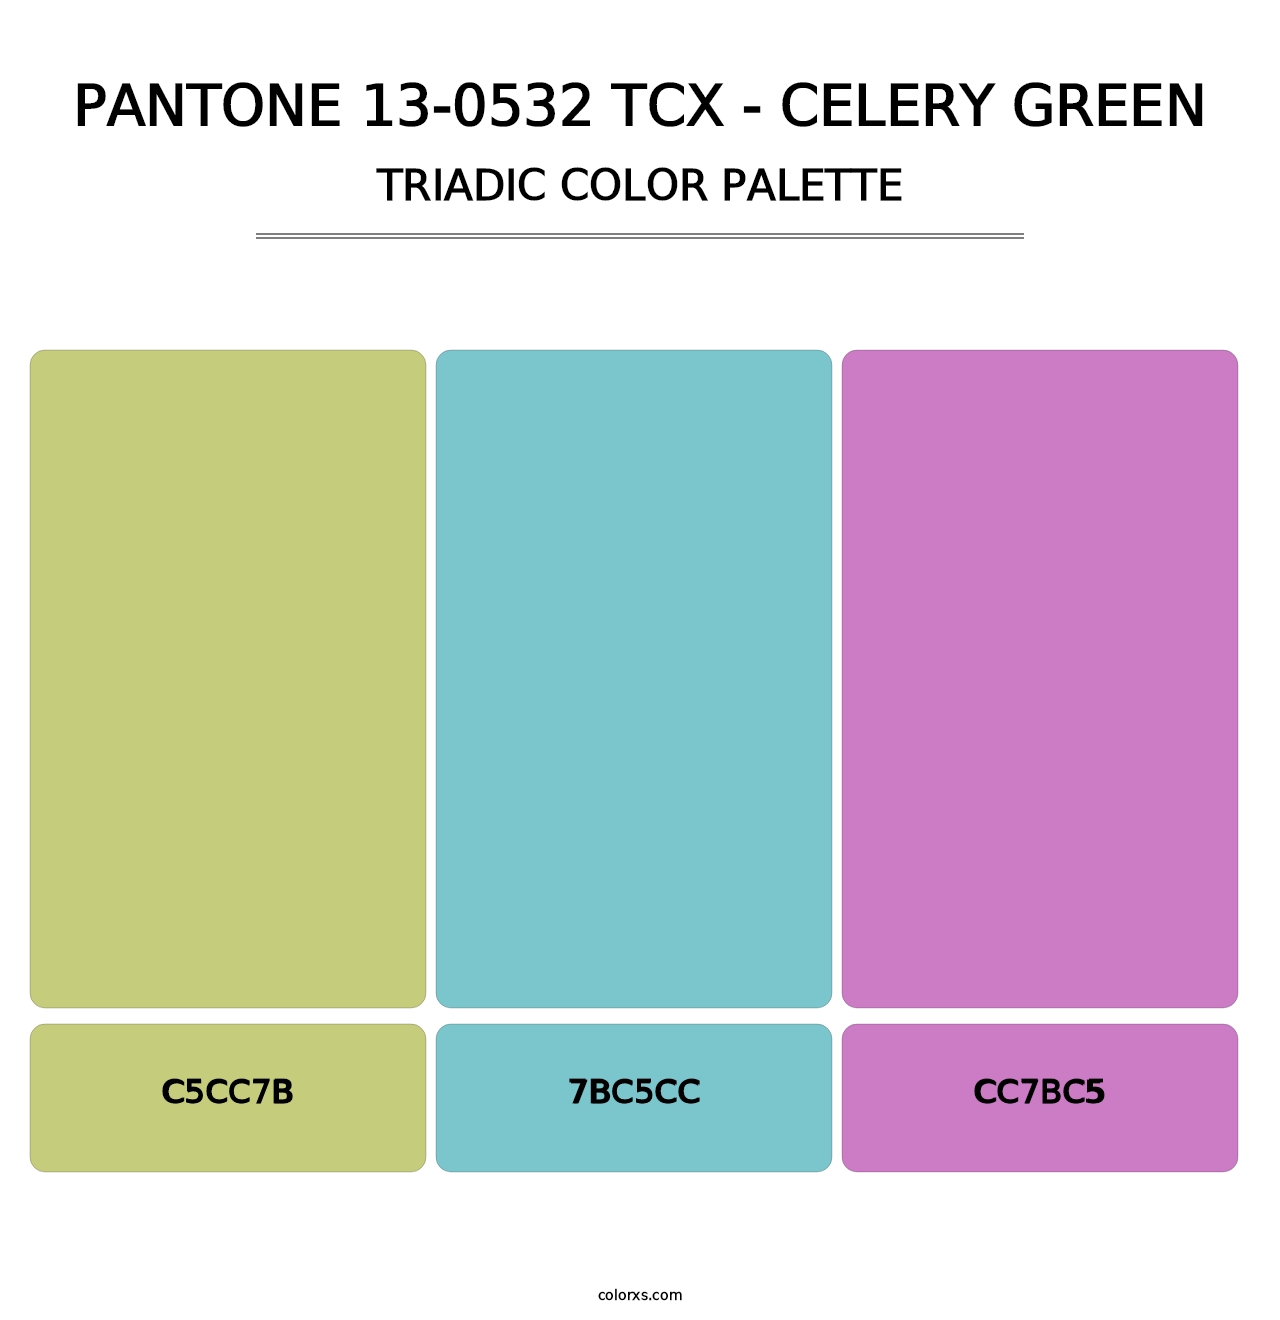 PANTONE 13-0532 TCX - Celery Green - Triadic Color Palette